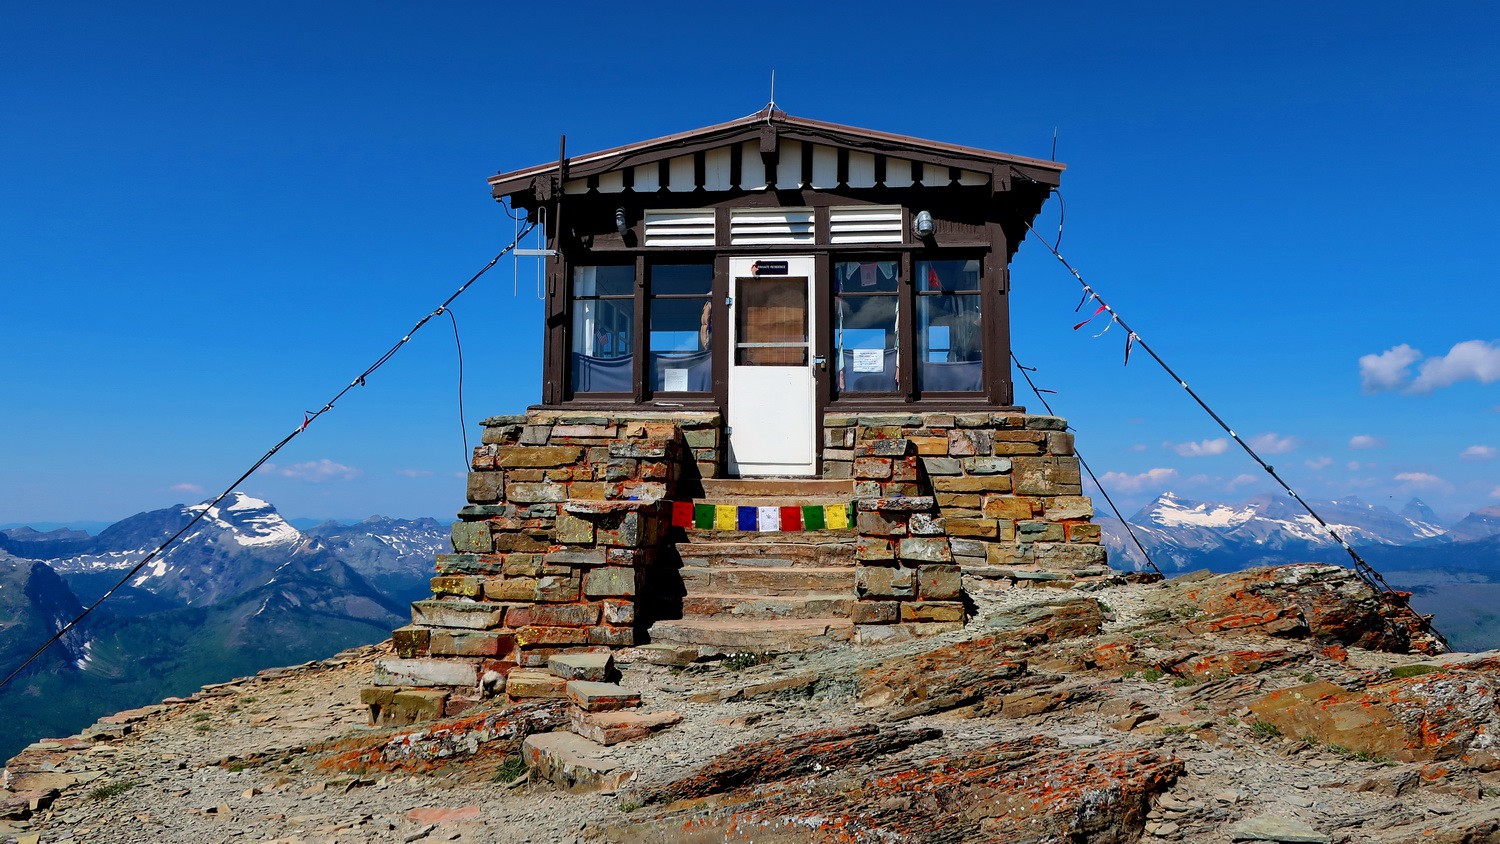 Fire vantage hut on top of 2571 meters high Swiftcurrent Peak